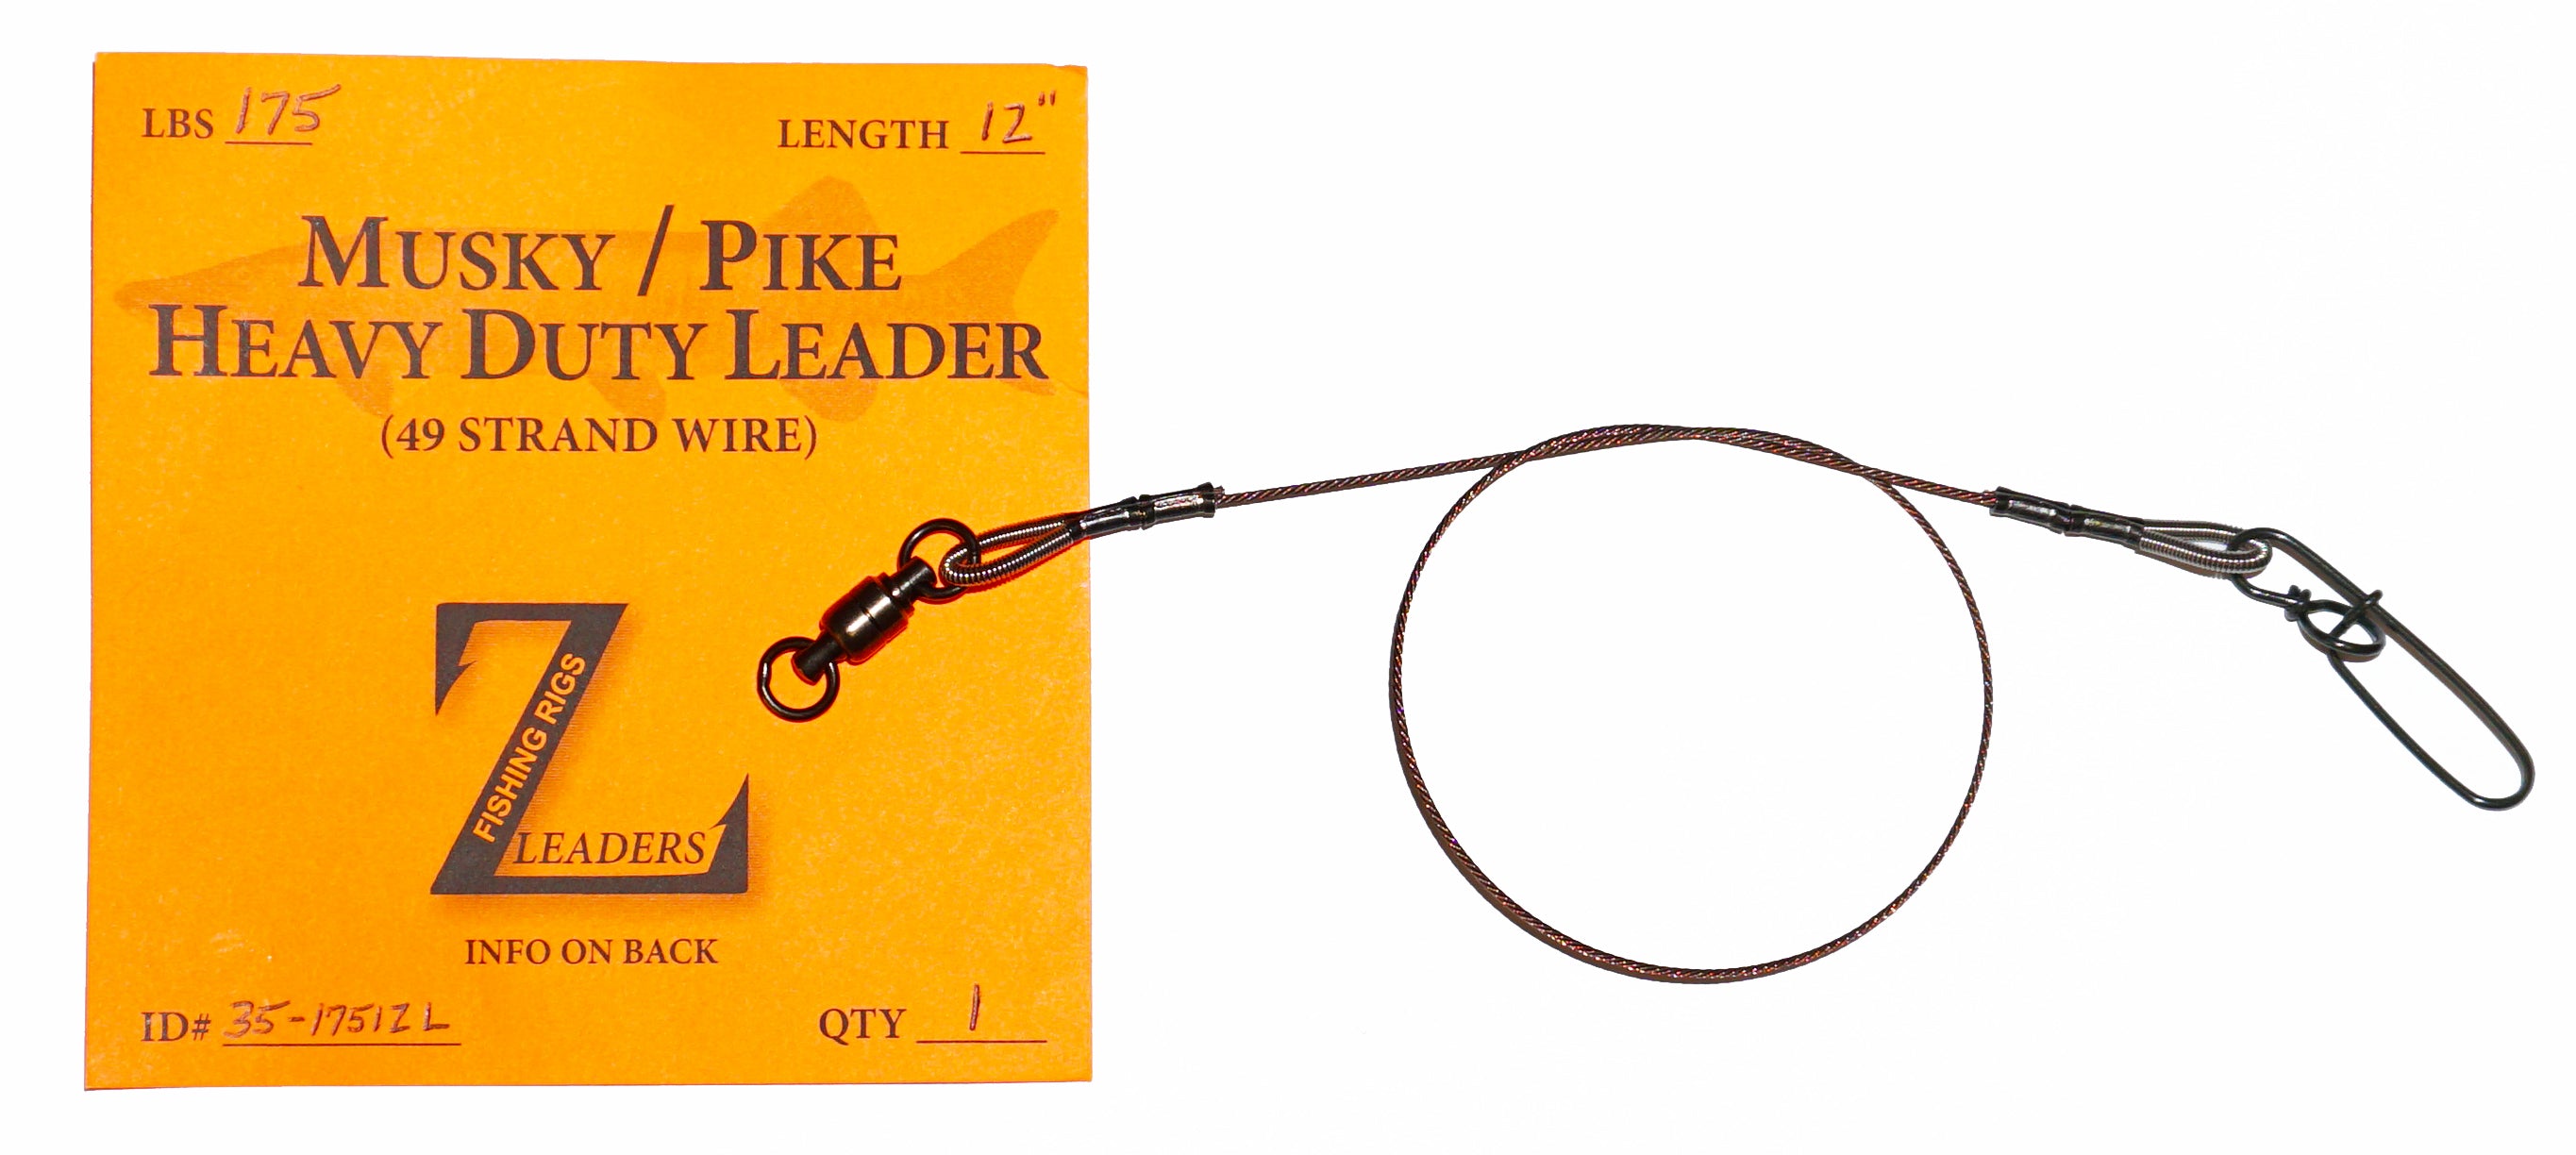 Z Leaders Heavy Wire 49 Strand Musky Pike Leader